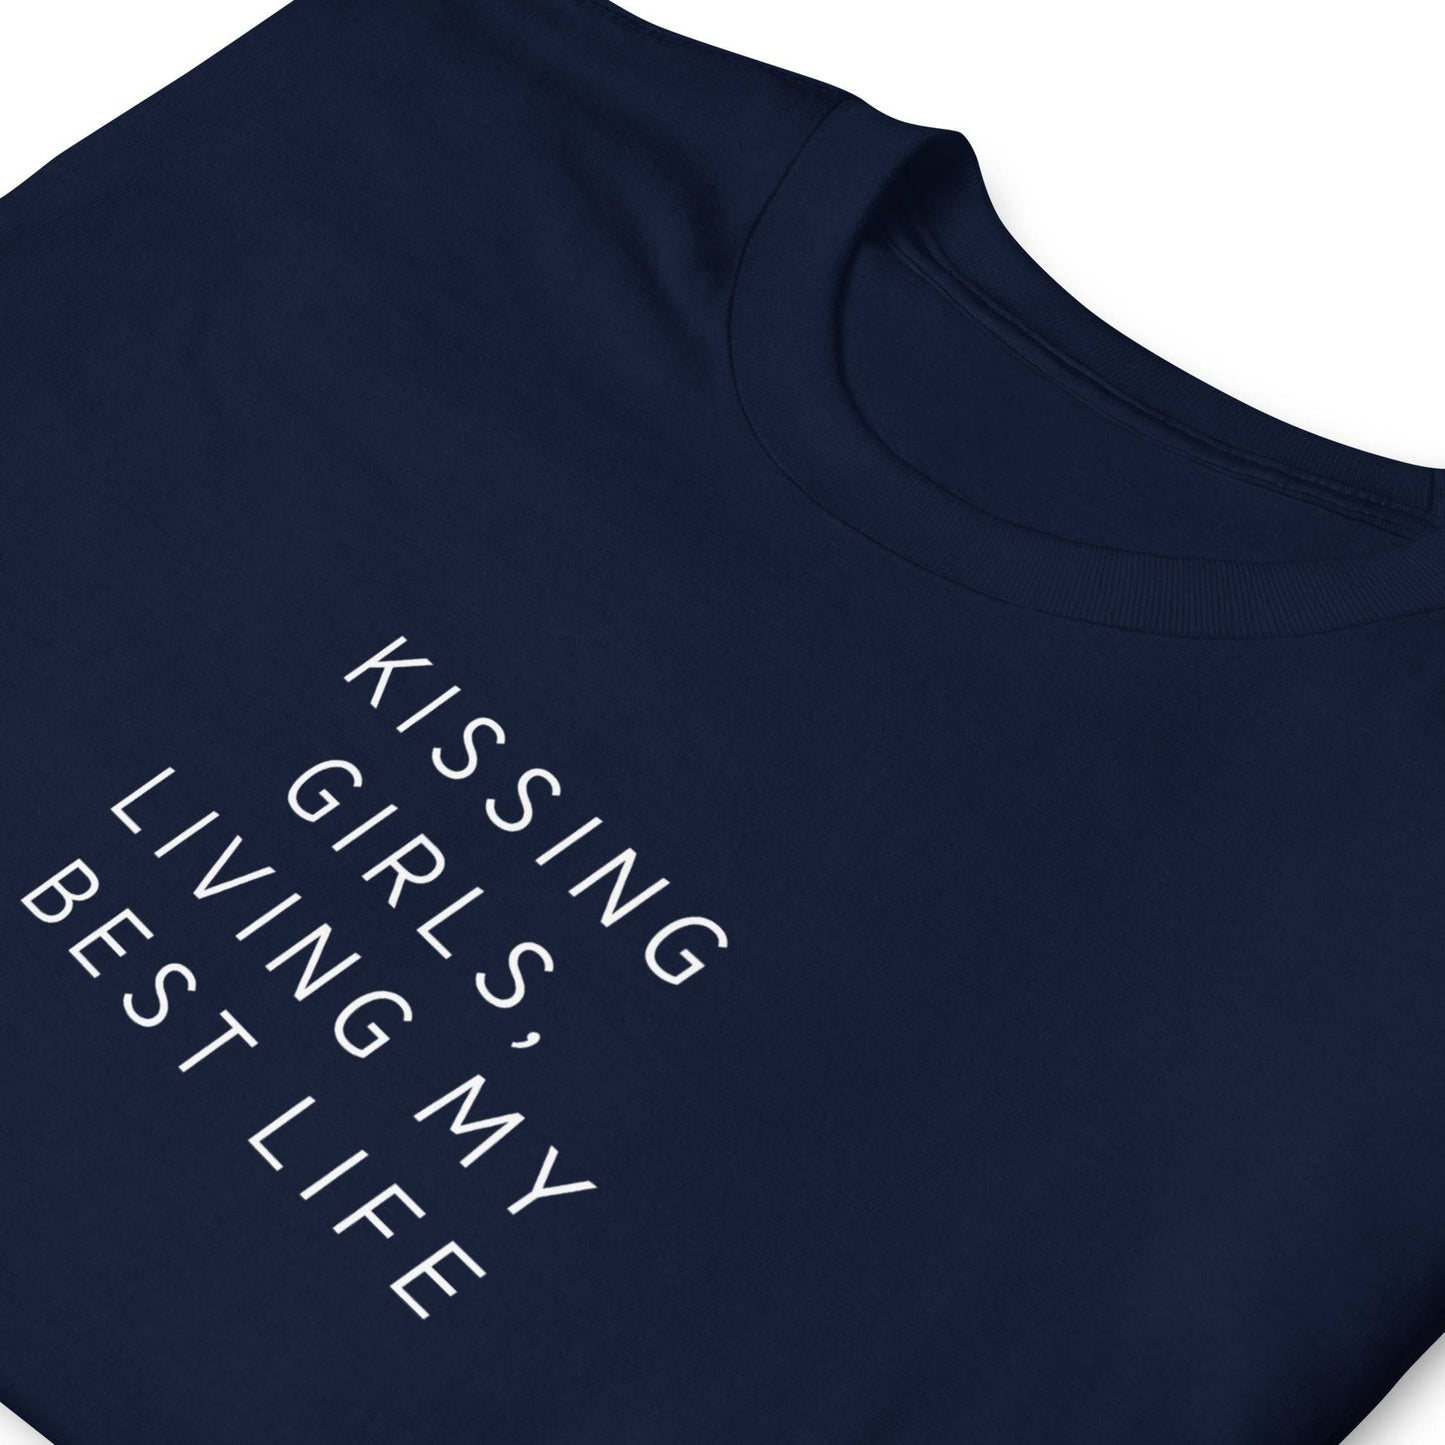 Kissing Girls WLW Pride  Short-Sleeve Unisex T-Shirt - Rose Gold Co. Shop